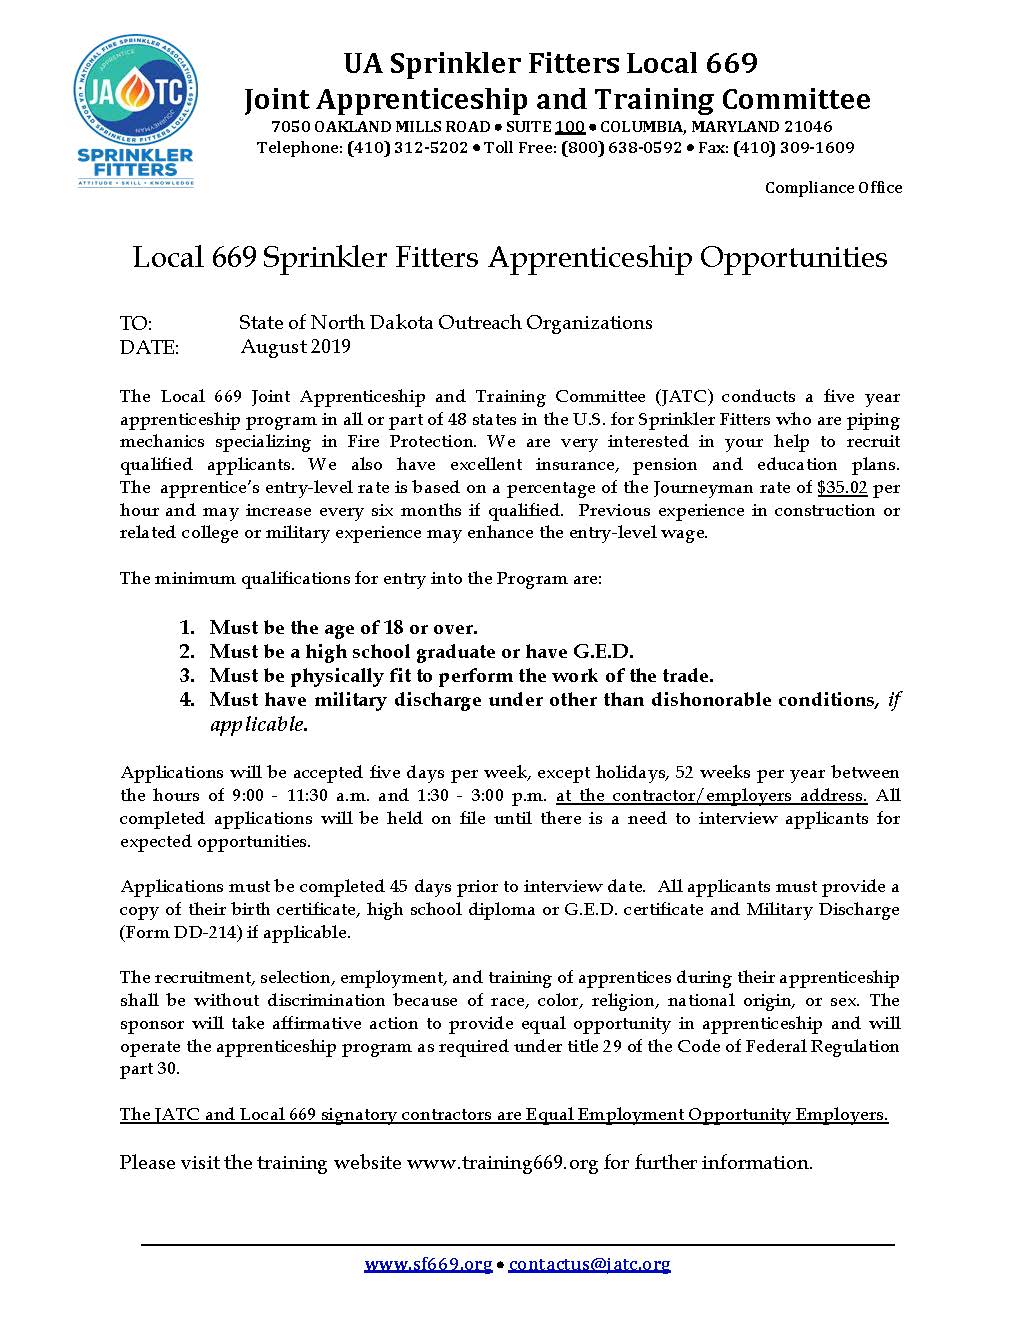 JATC Sprinkler Fitters Apprenticeship Opportunities, August 2019